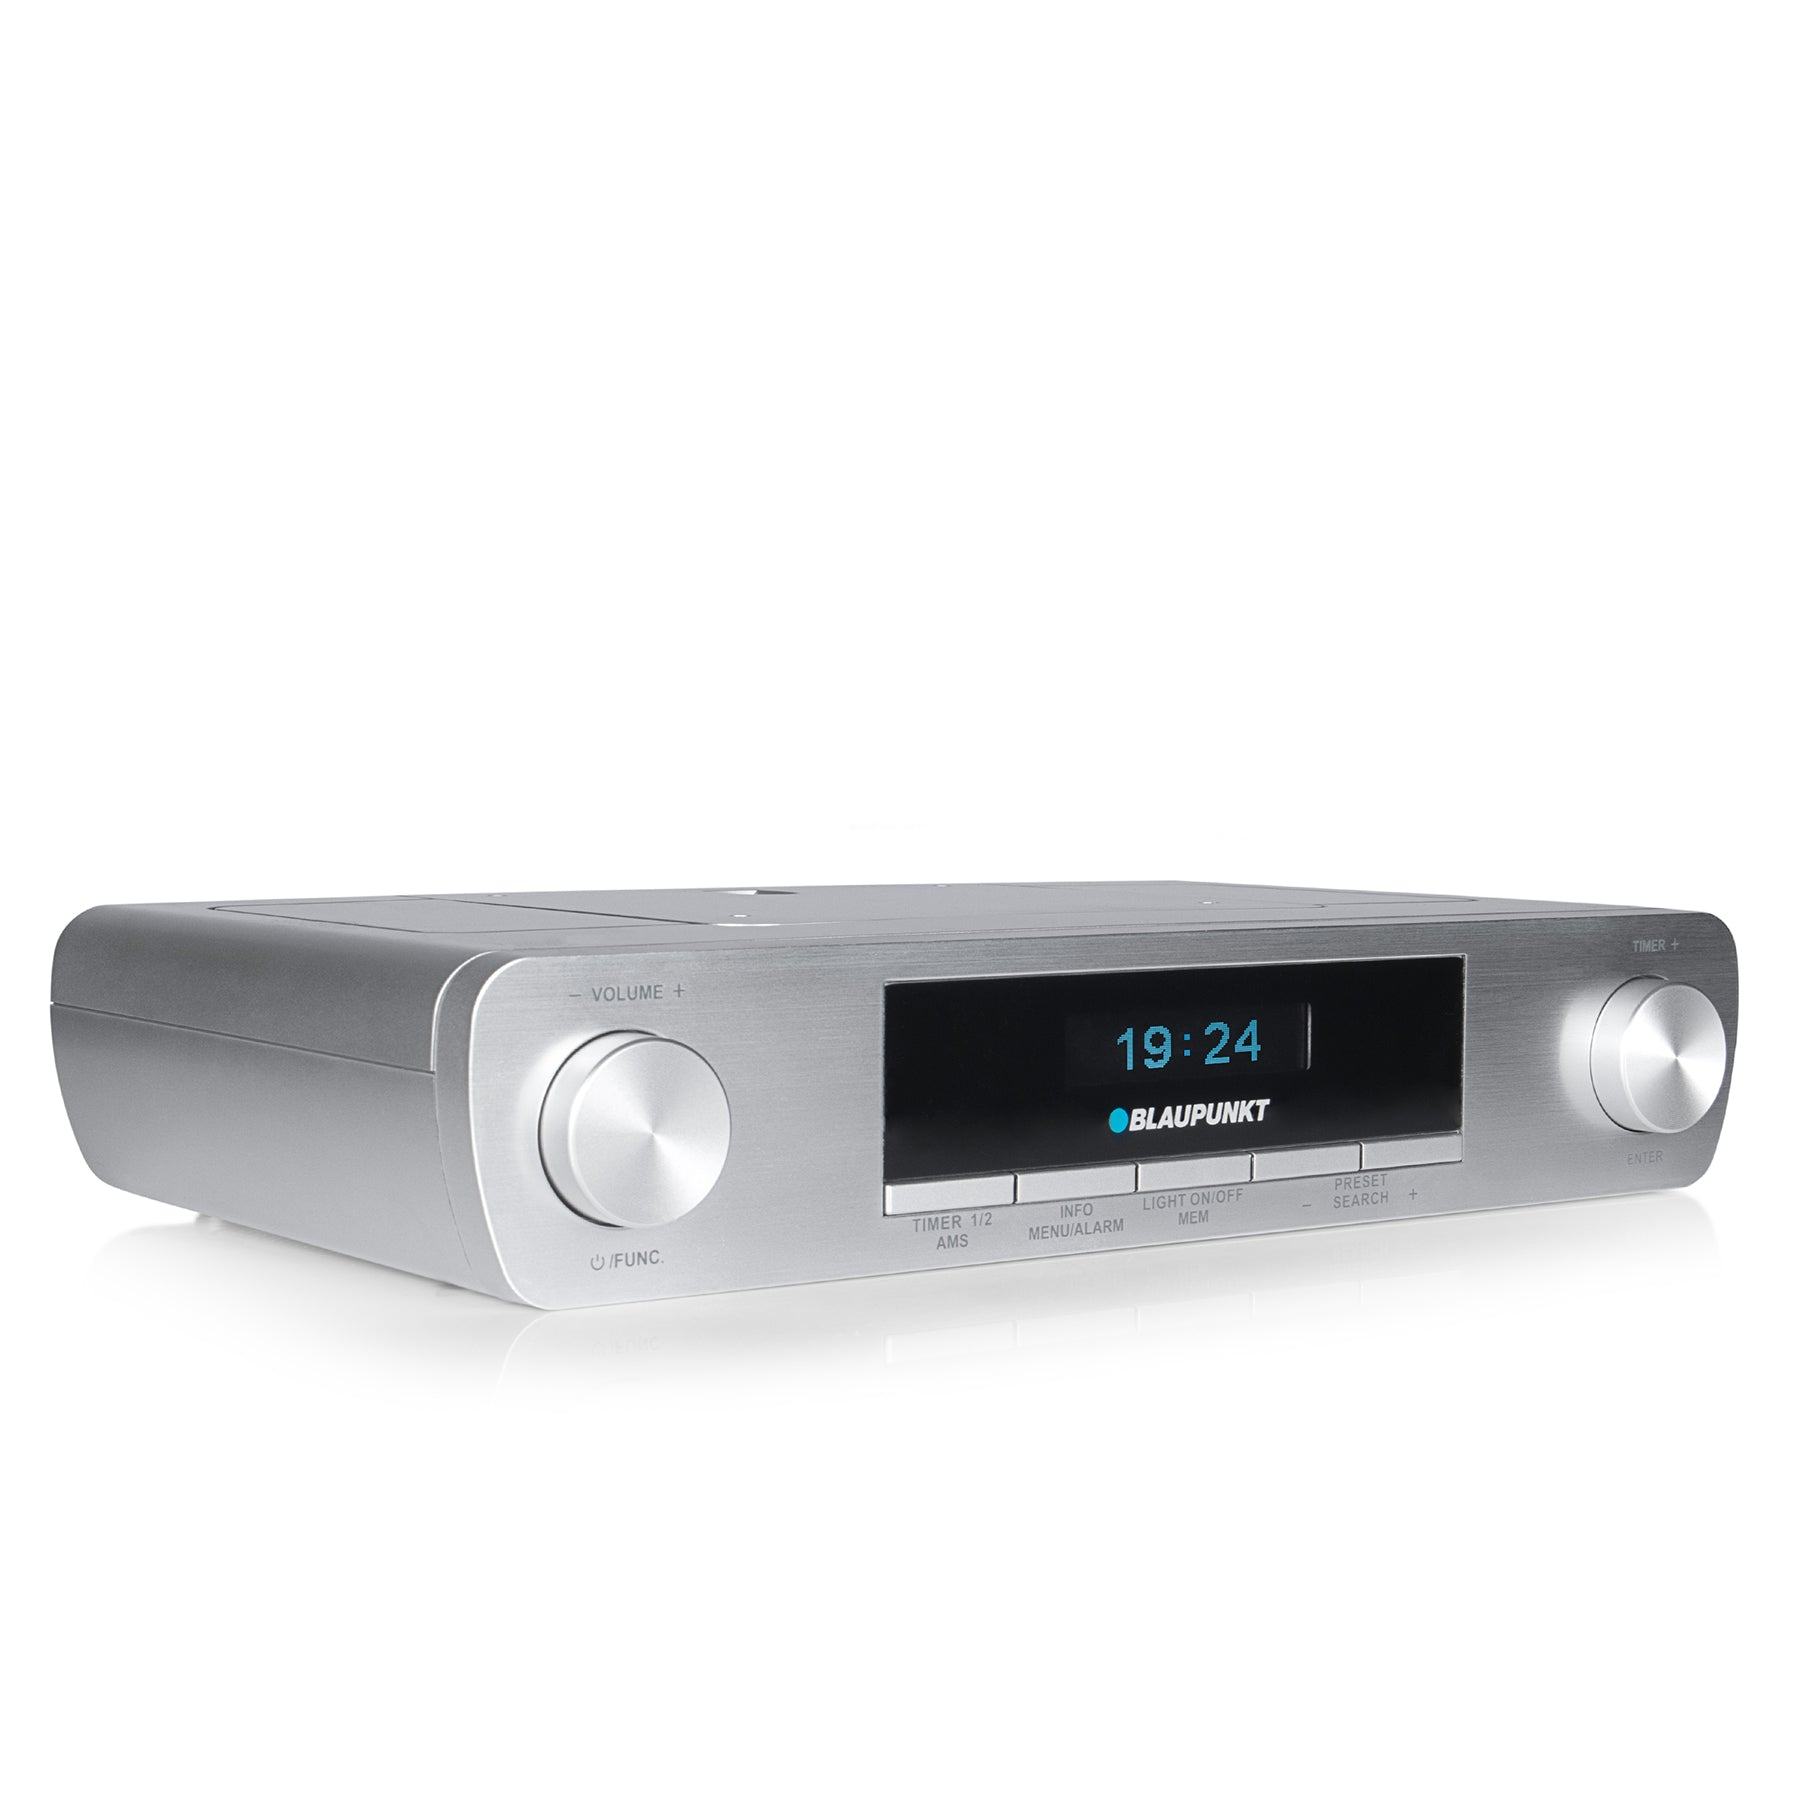 BLAUPUNKT Bluetooth Küchenradio mit Silber DAB, | Küchenradio, DAB, KRD DAB+, FM, DAB+ 30